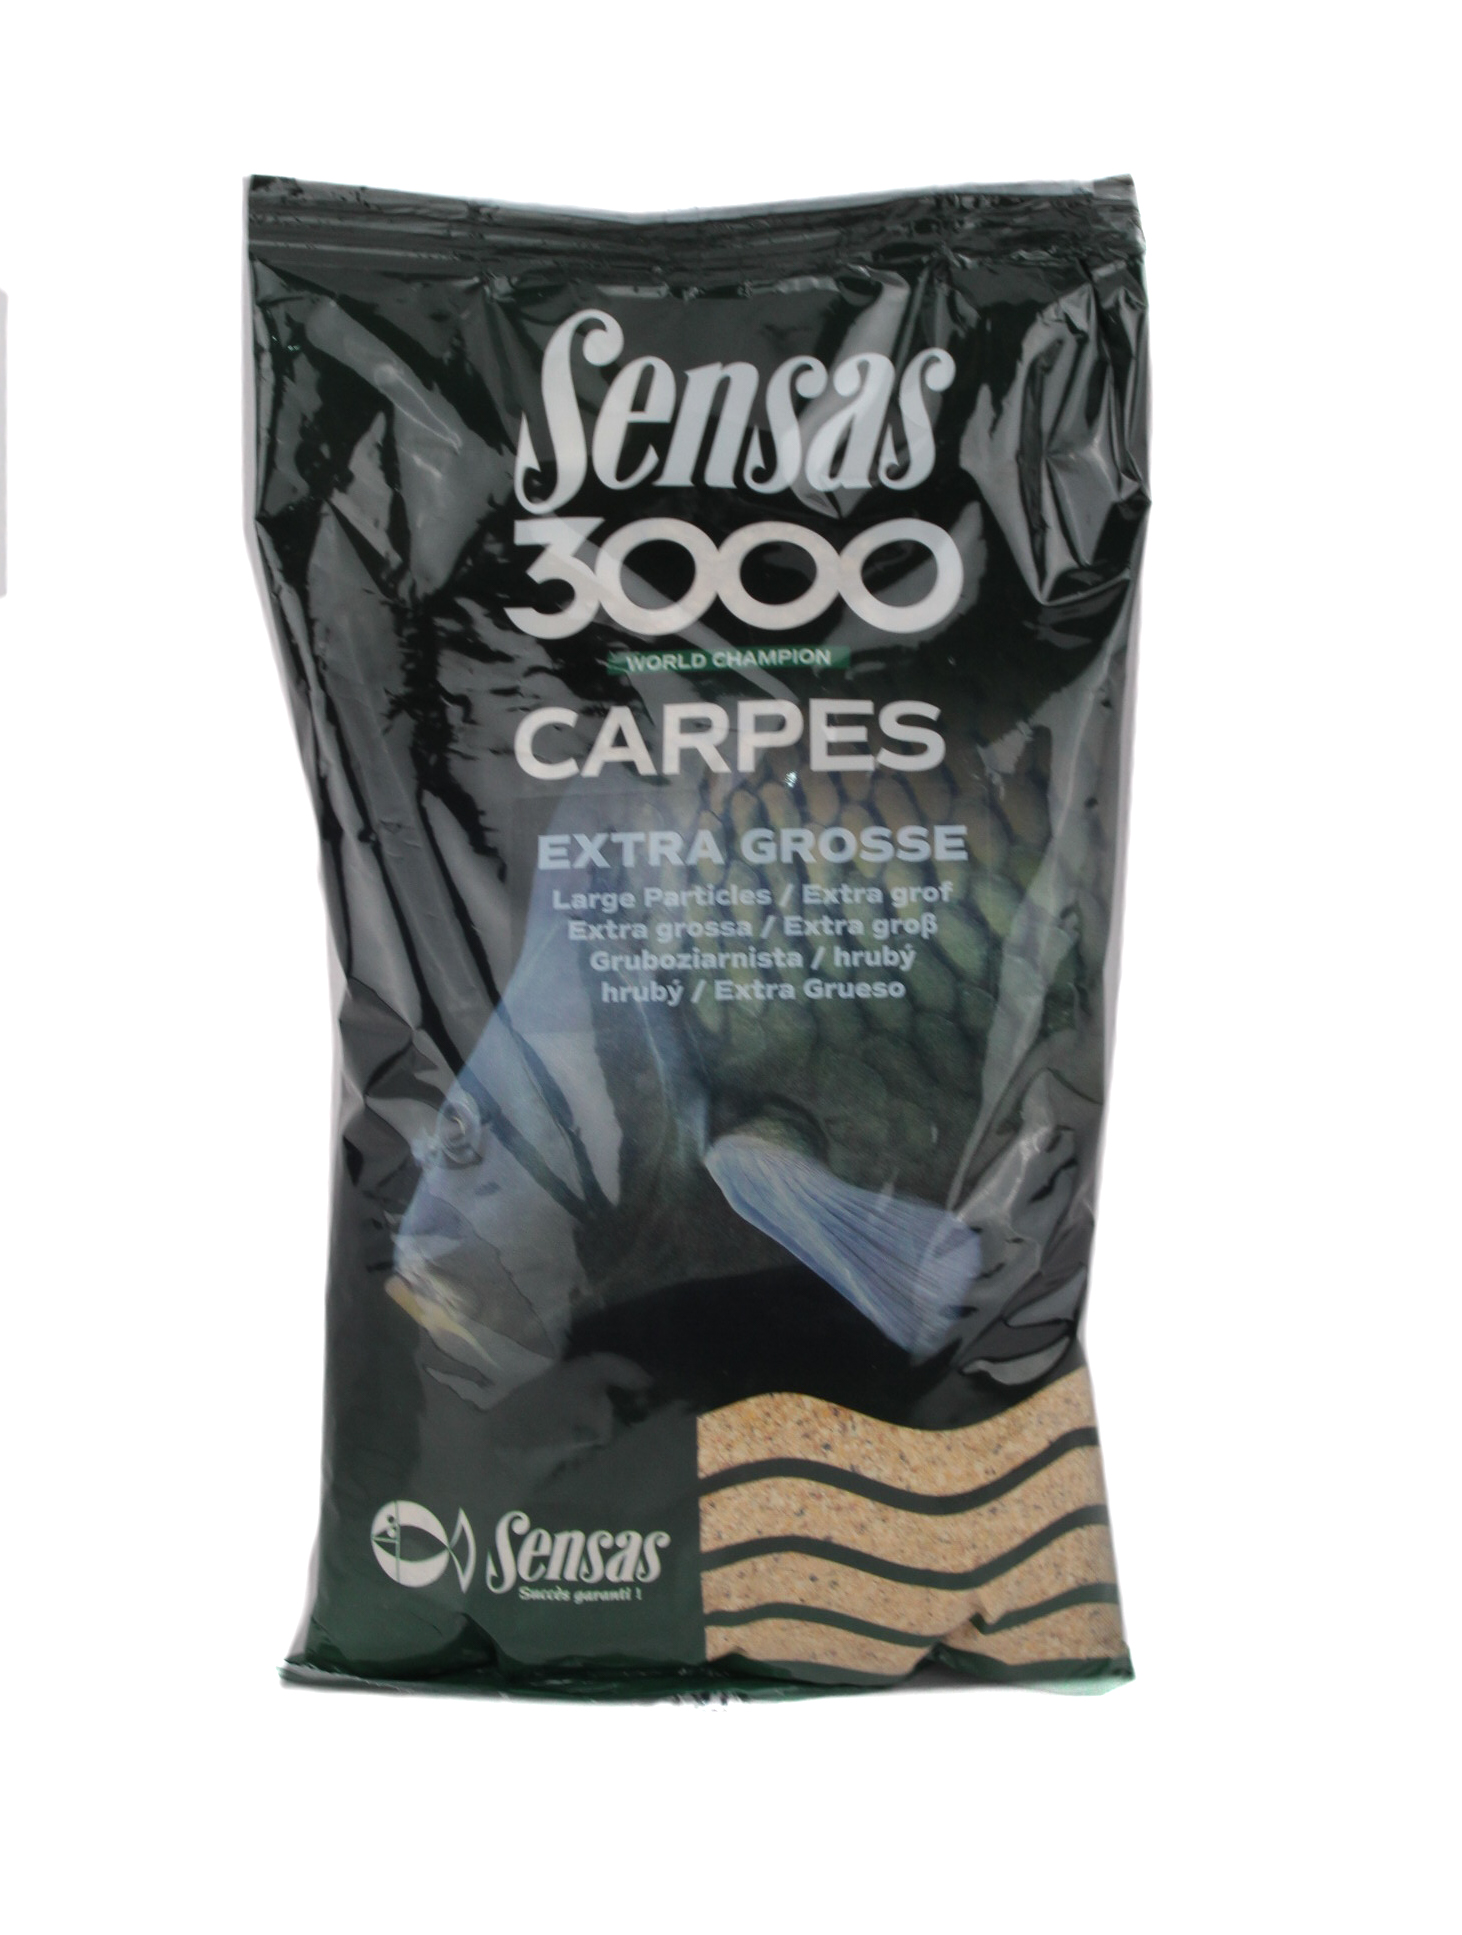 Прикормка Sensas 3000 1кг carp extra grosse - фото 1